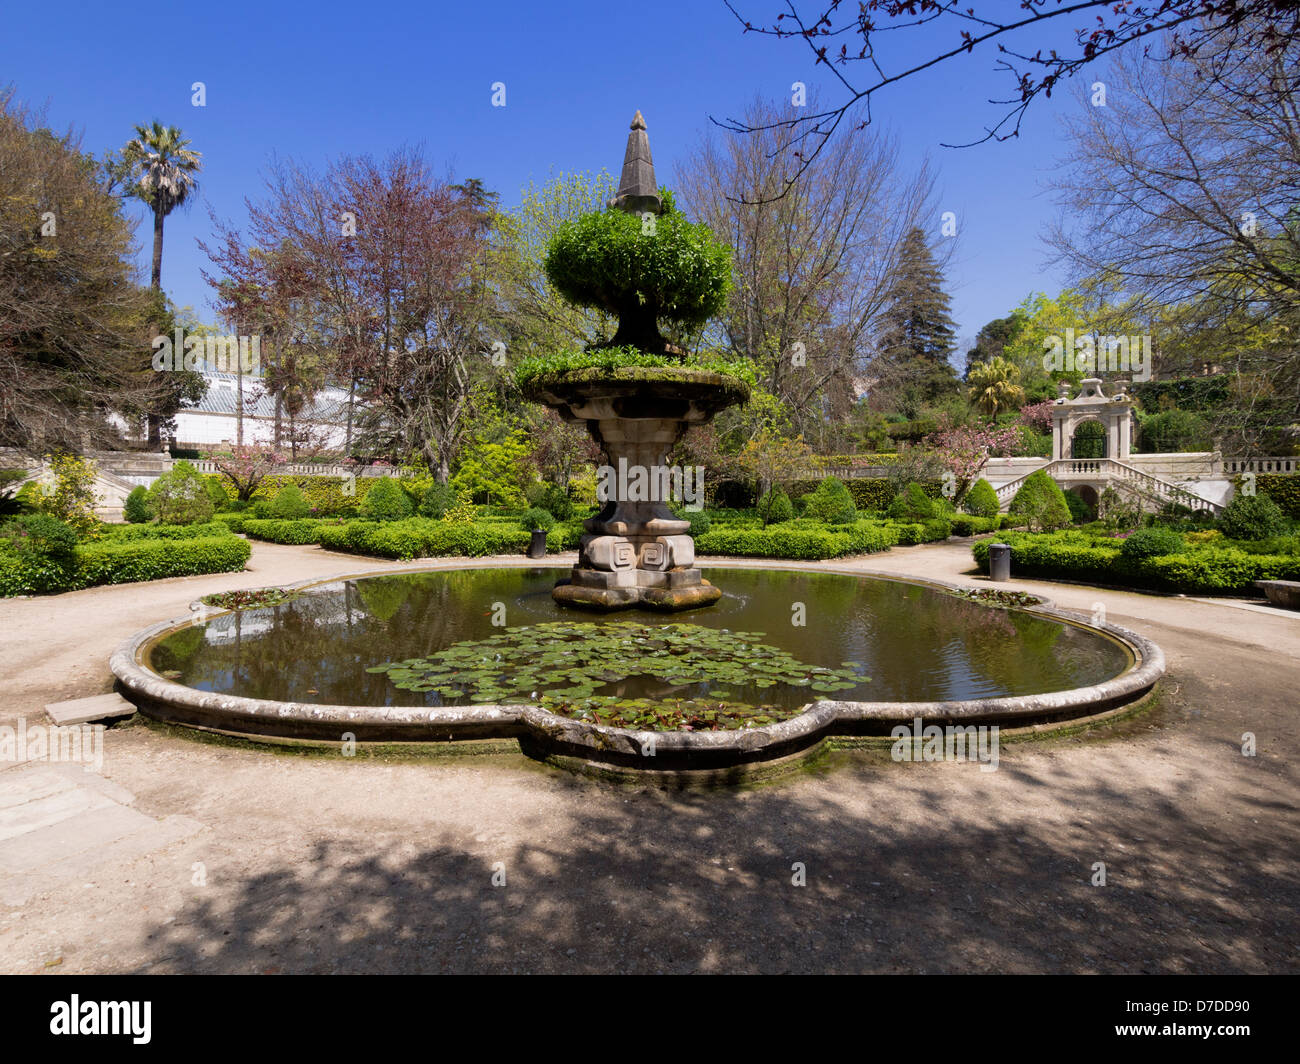 Fontaine du jardin botanique Jardim Botânico à Coimbra, Portugal, Europe  Photo Stock - Alamy